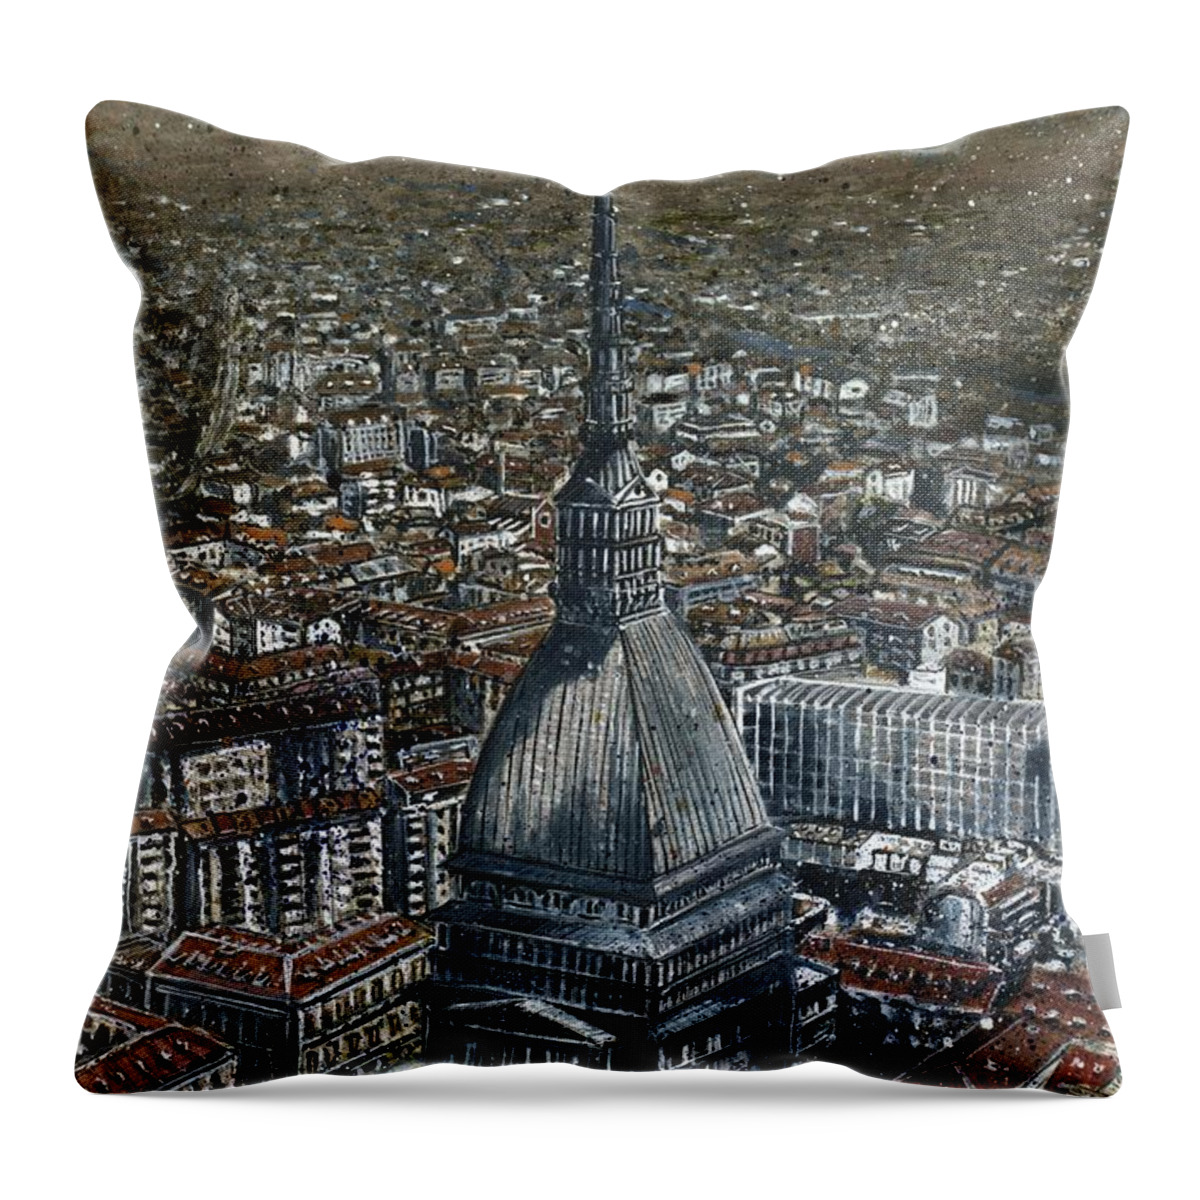 Italia Throw Pillow featuring the digital art Mole Ottobre by Andrea Gatti